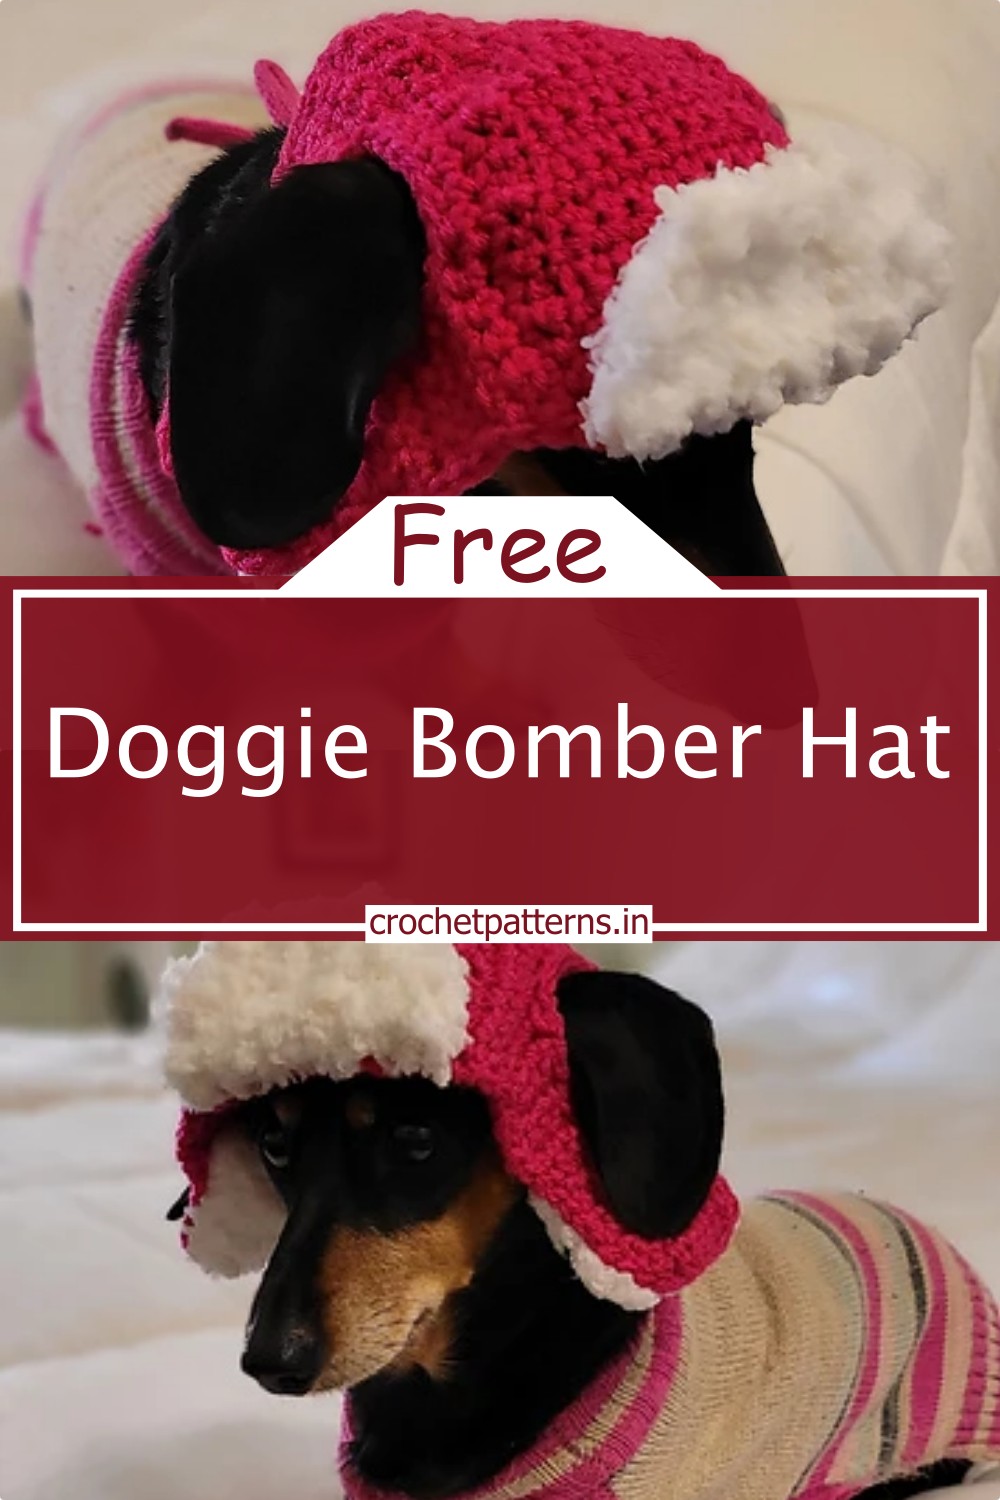 Doggie Bomber Hat